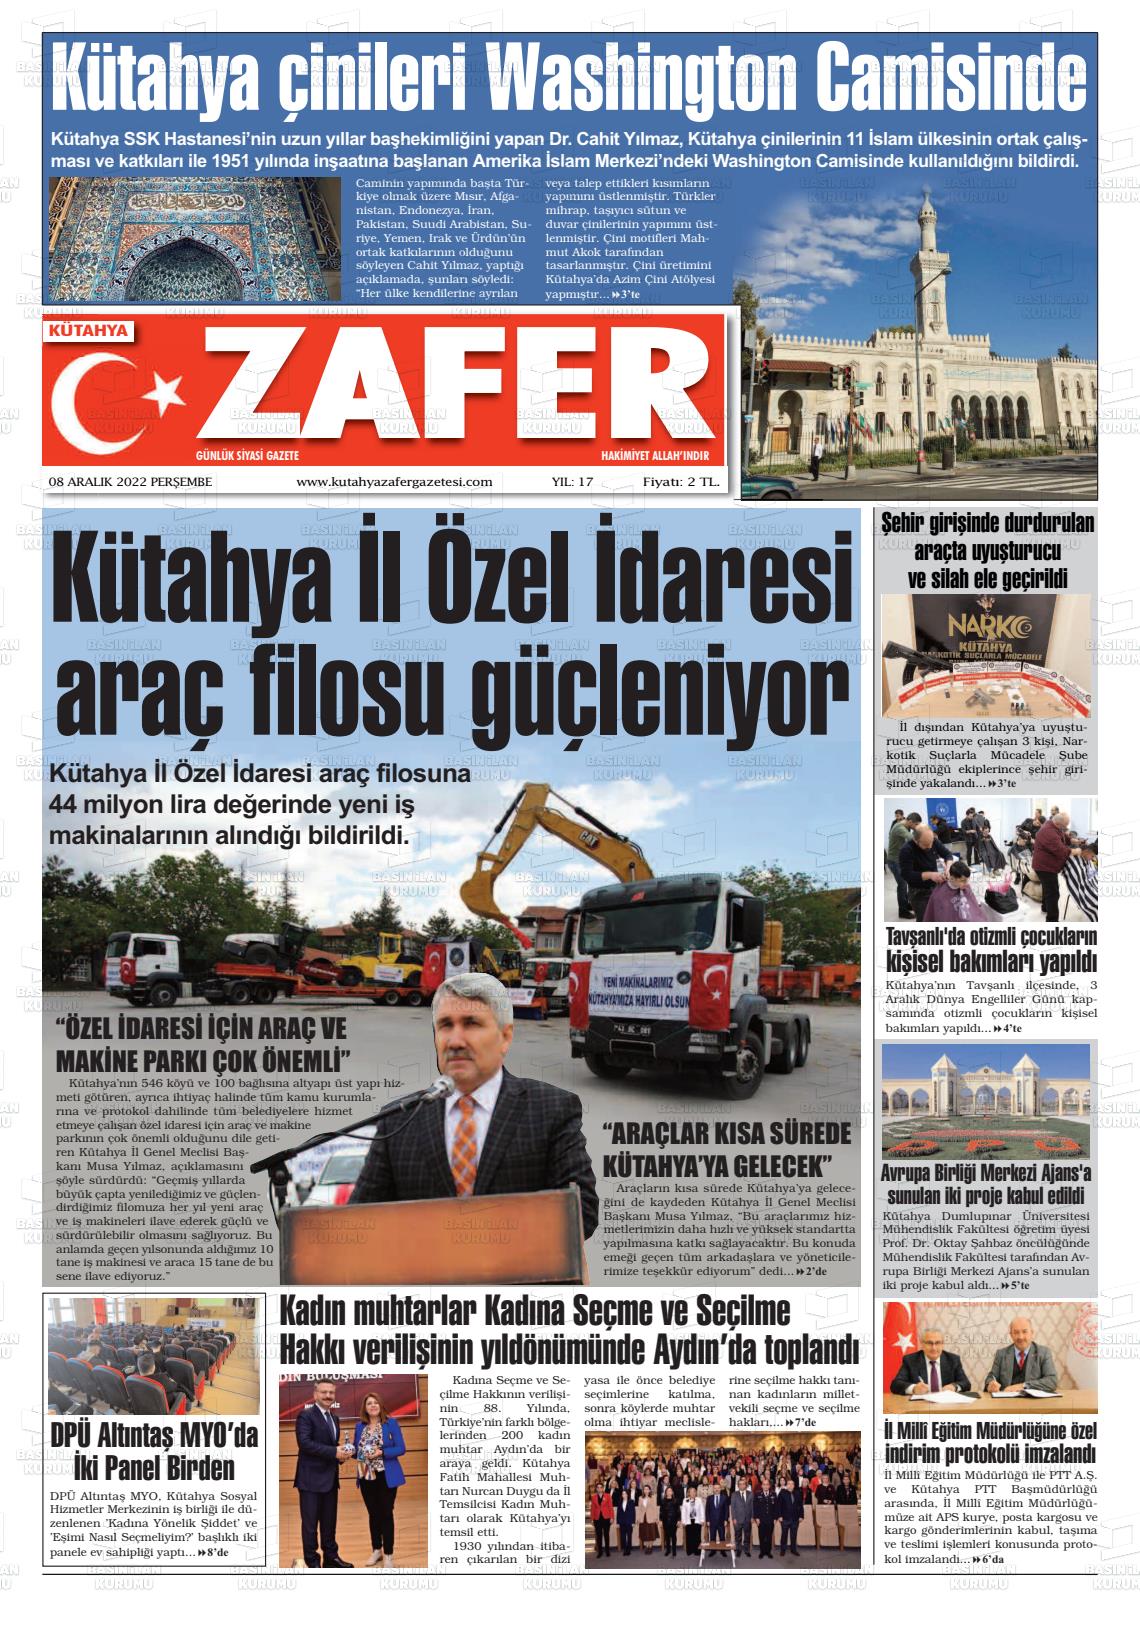 08 Aralık 2022 Kütahya Zafer Gazete Manşeti